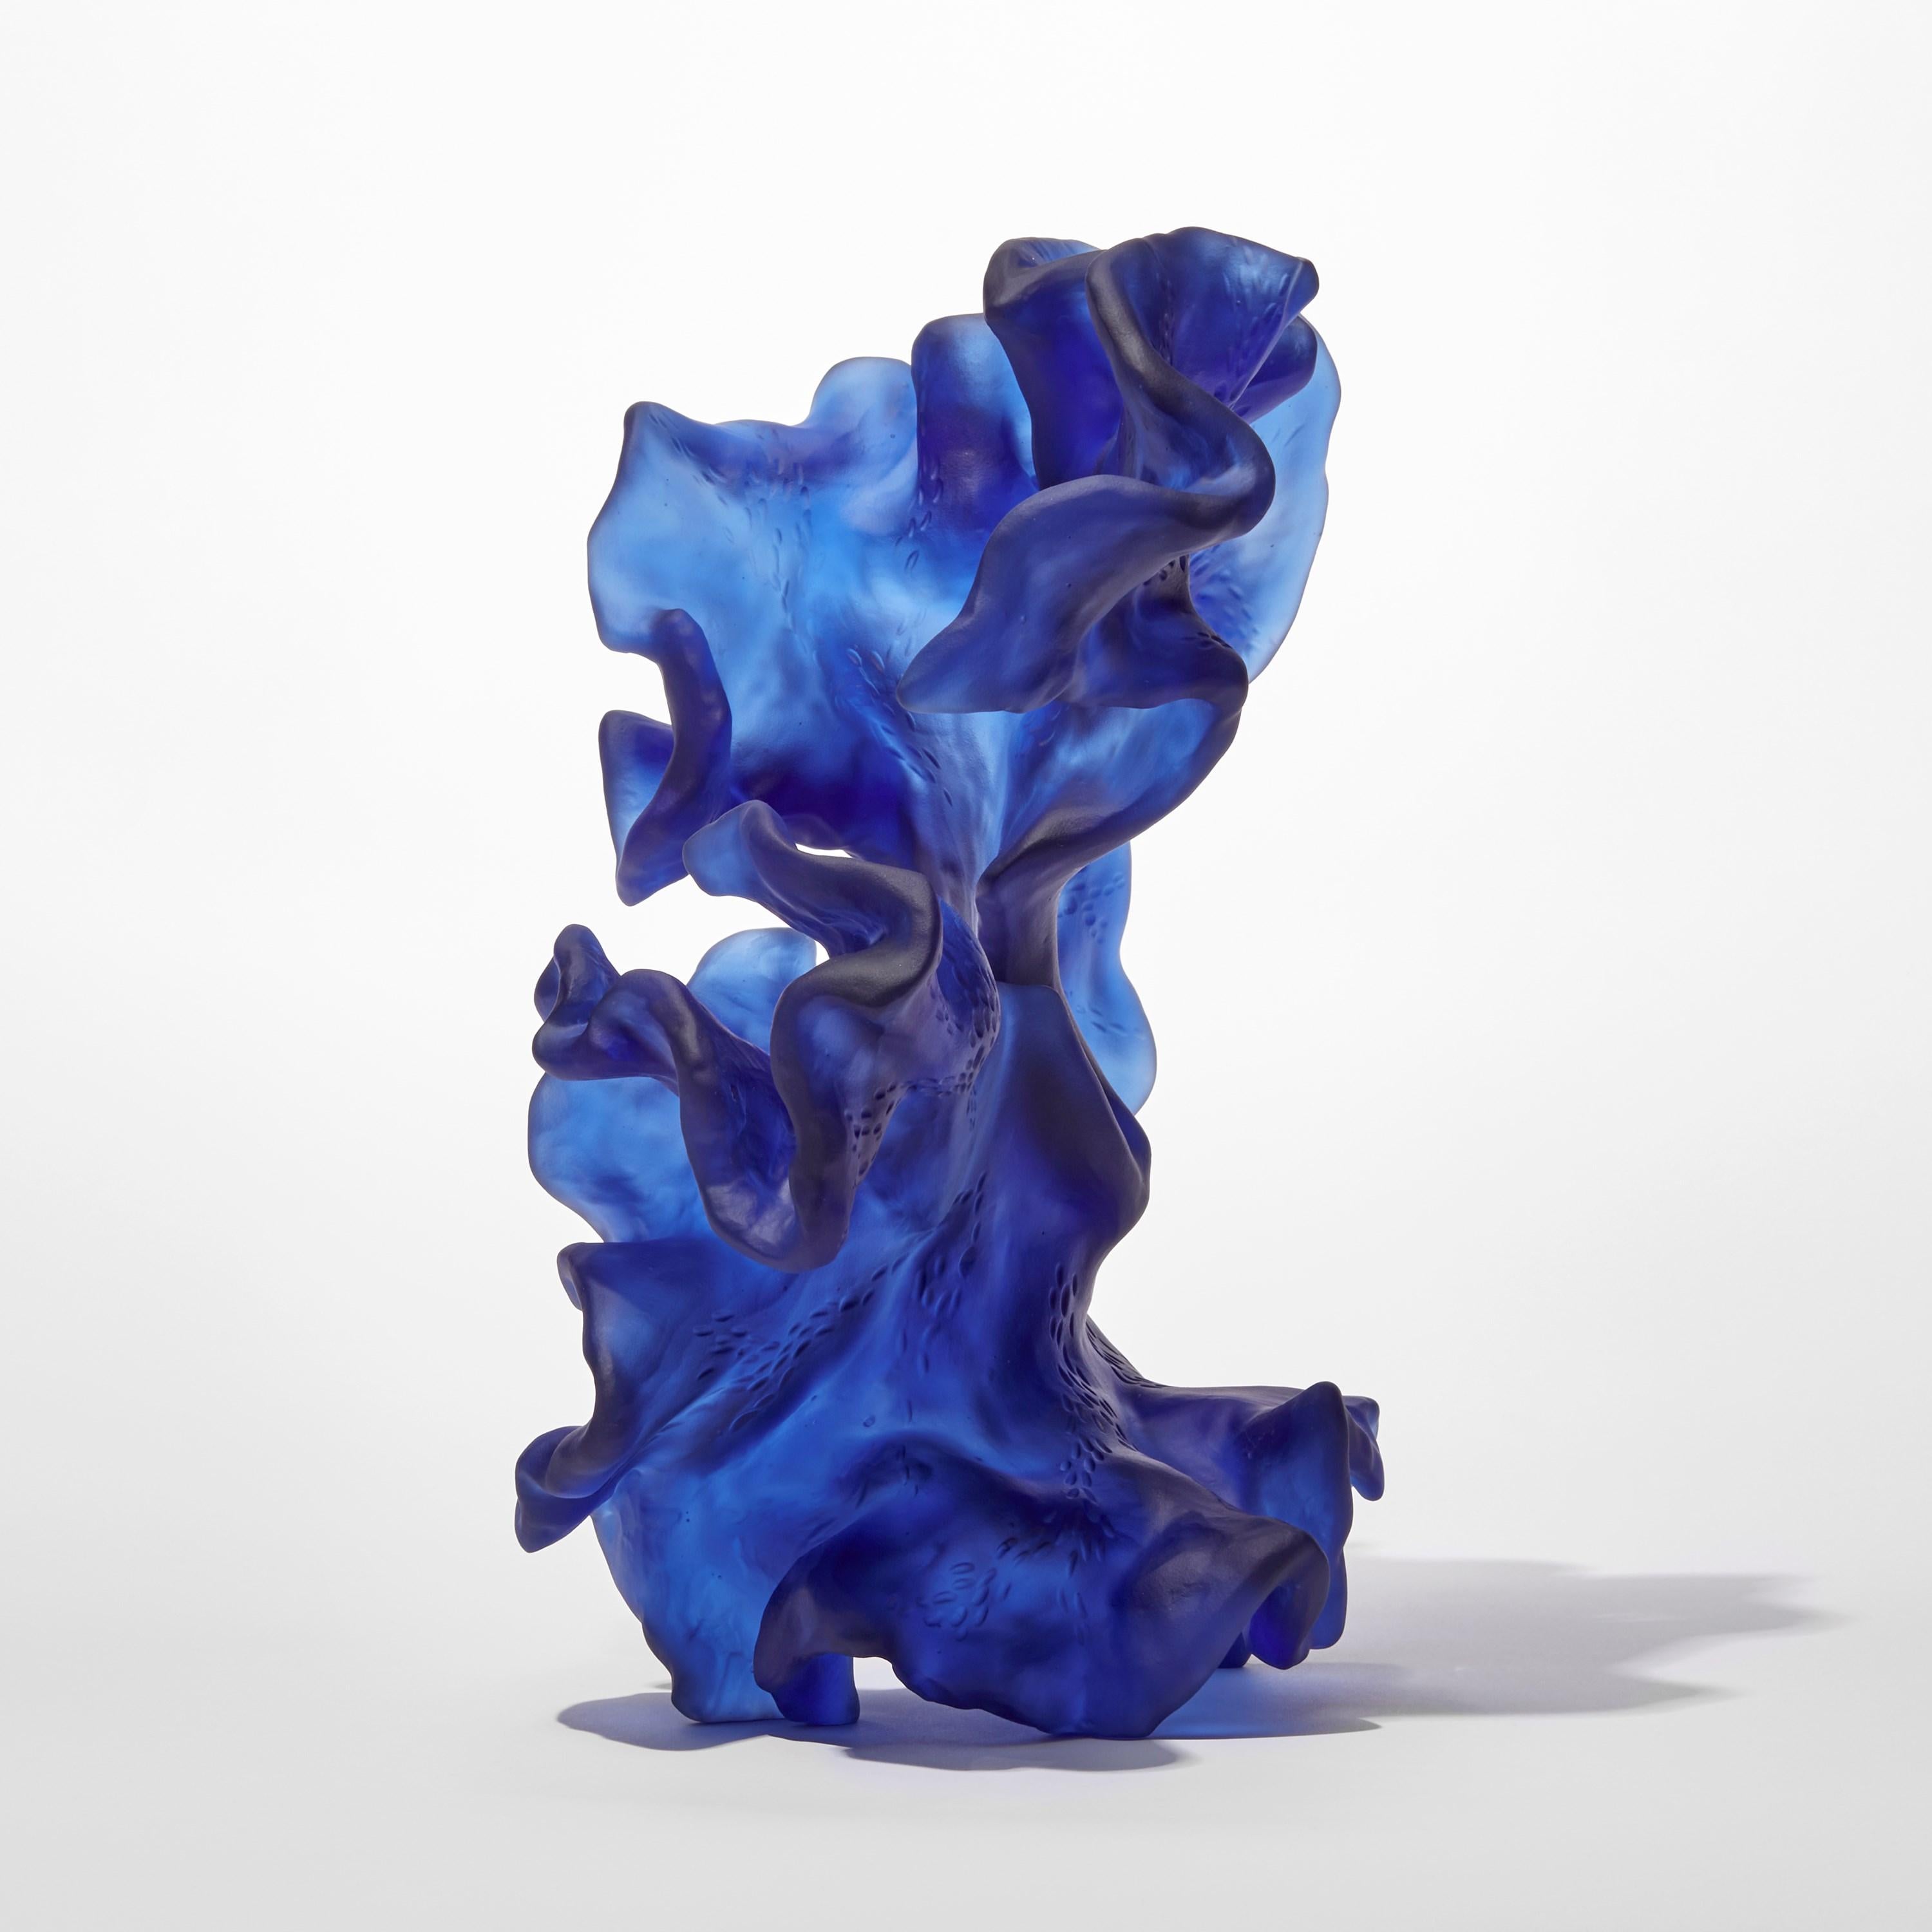 Organic Modern  Dancing Spirit, blue organic ethereal cast glass sculpture by Monette Larsen For Sale